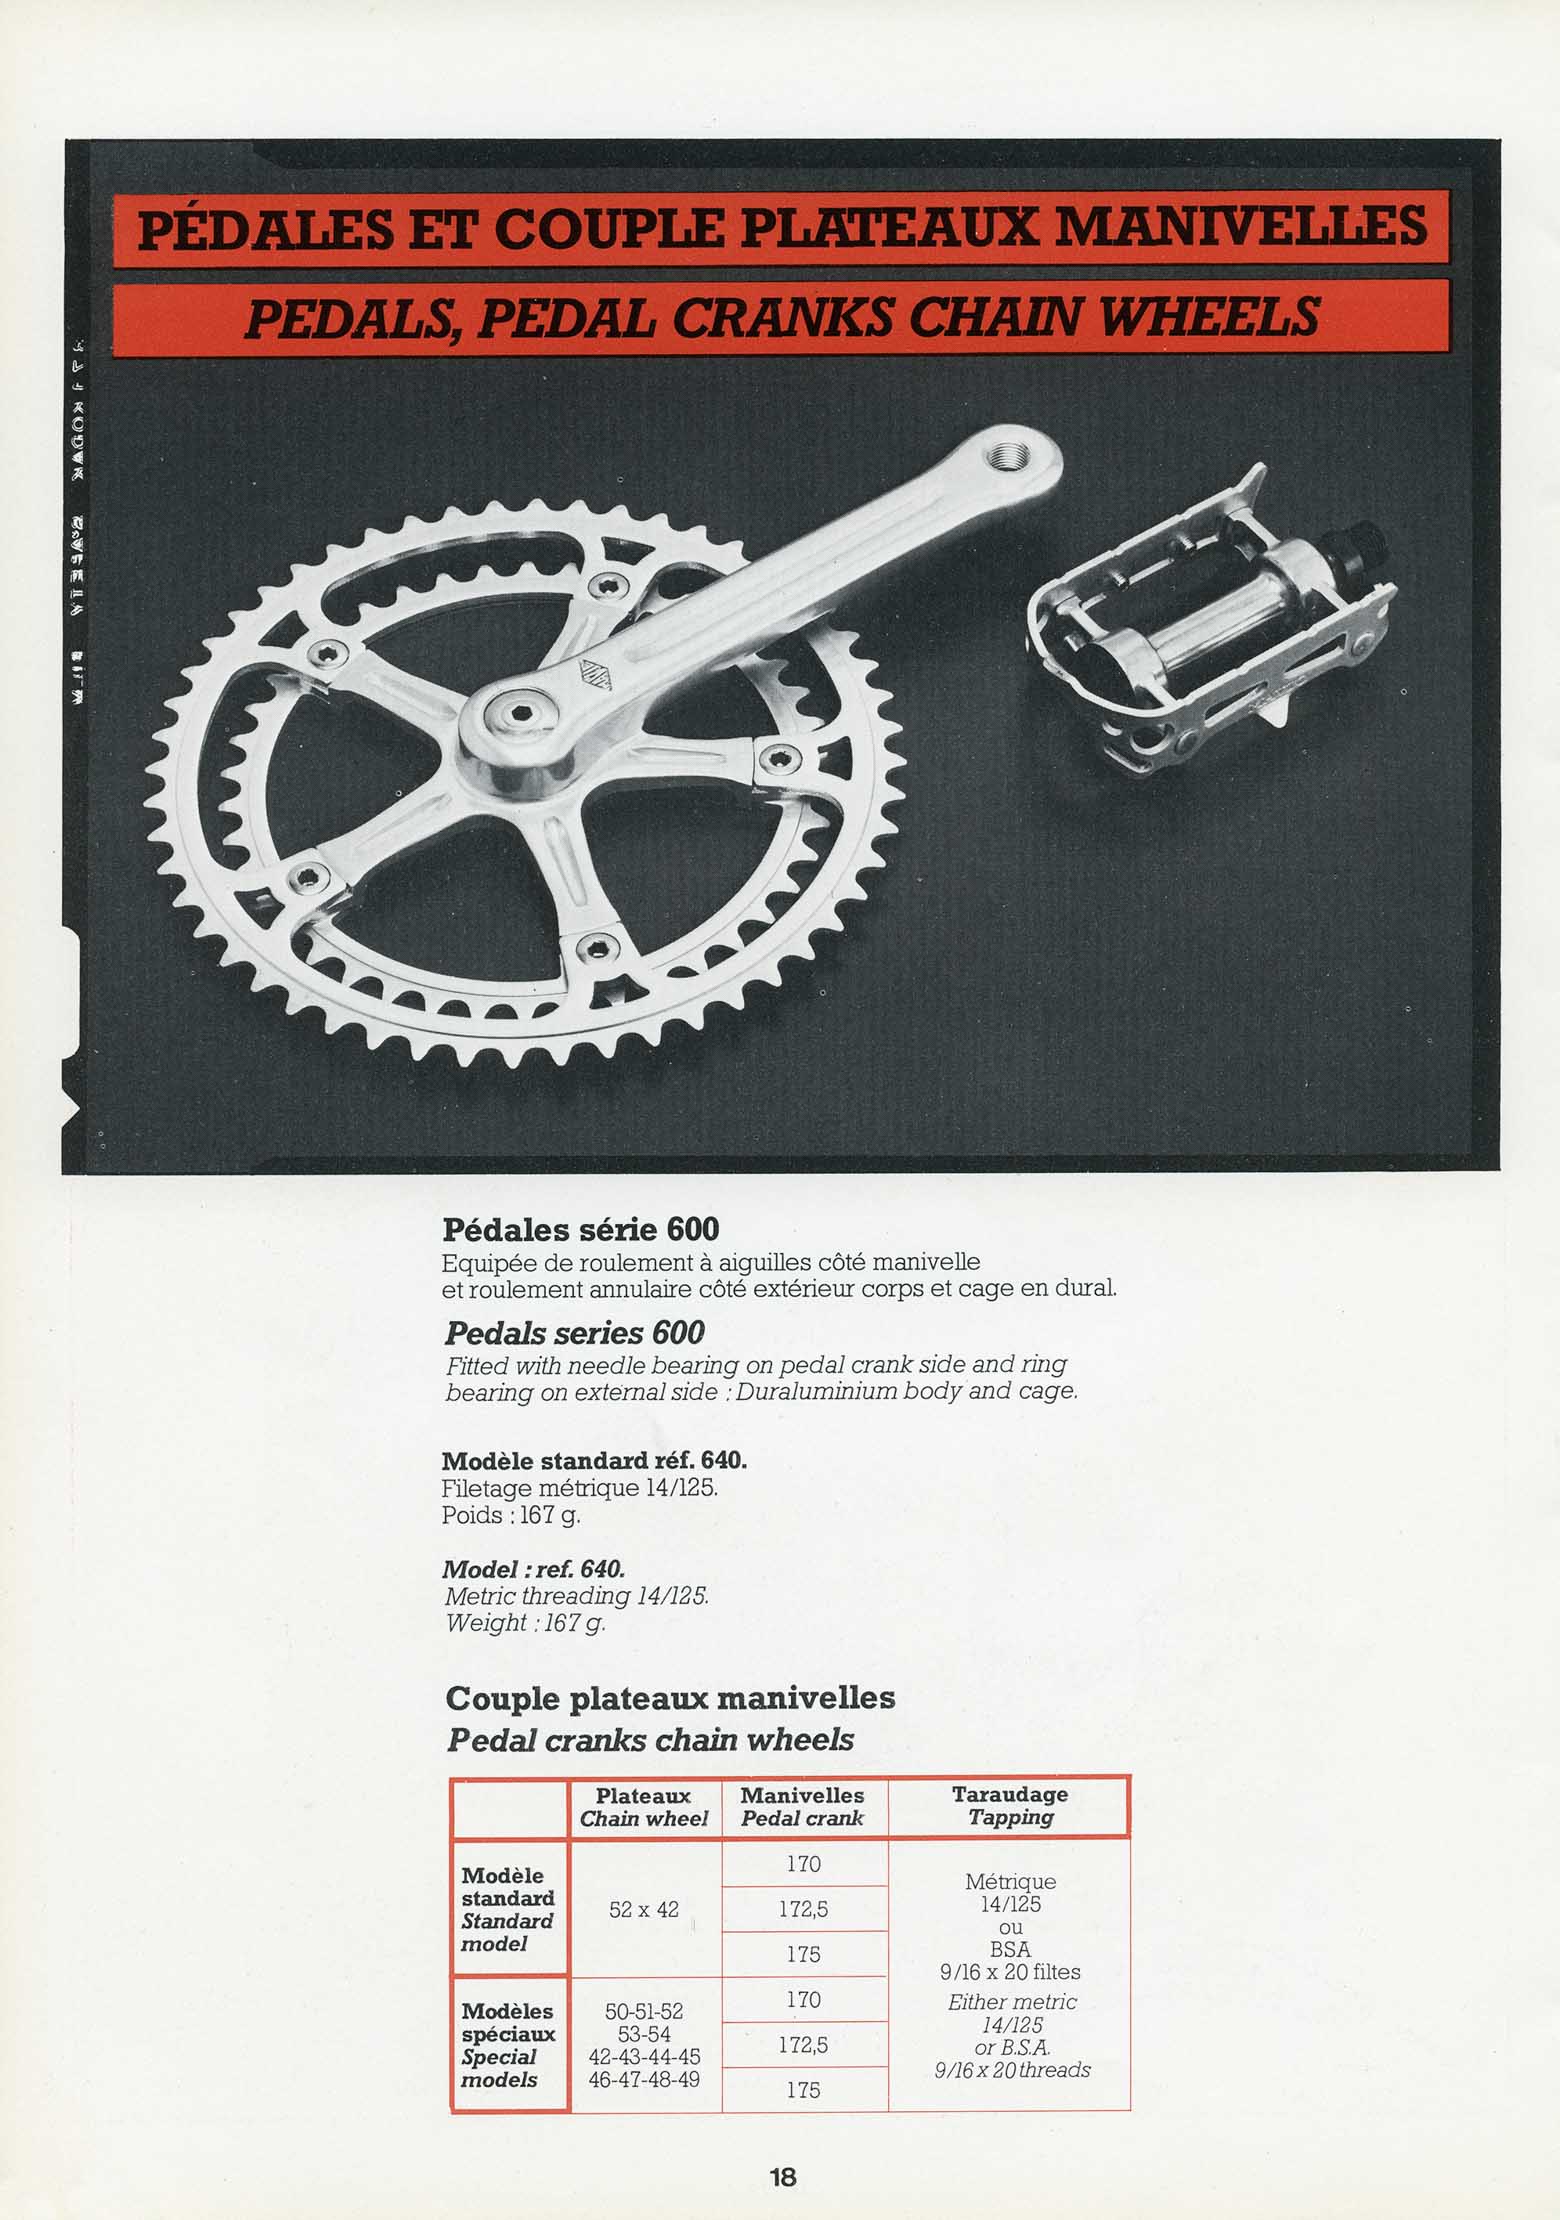 Mavic - Catalogue 1980? page 18 main image